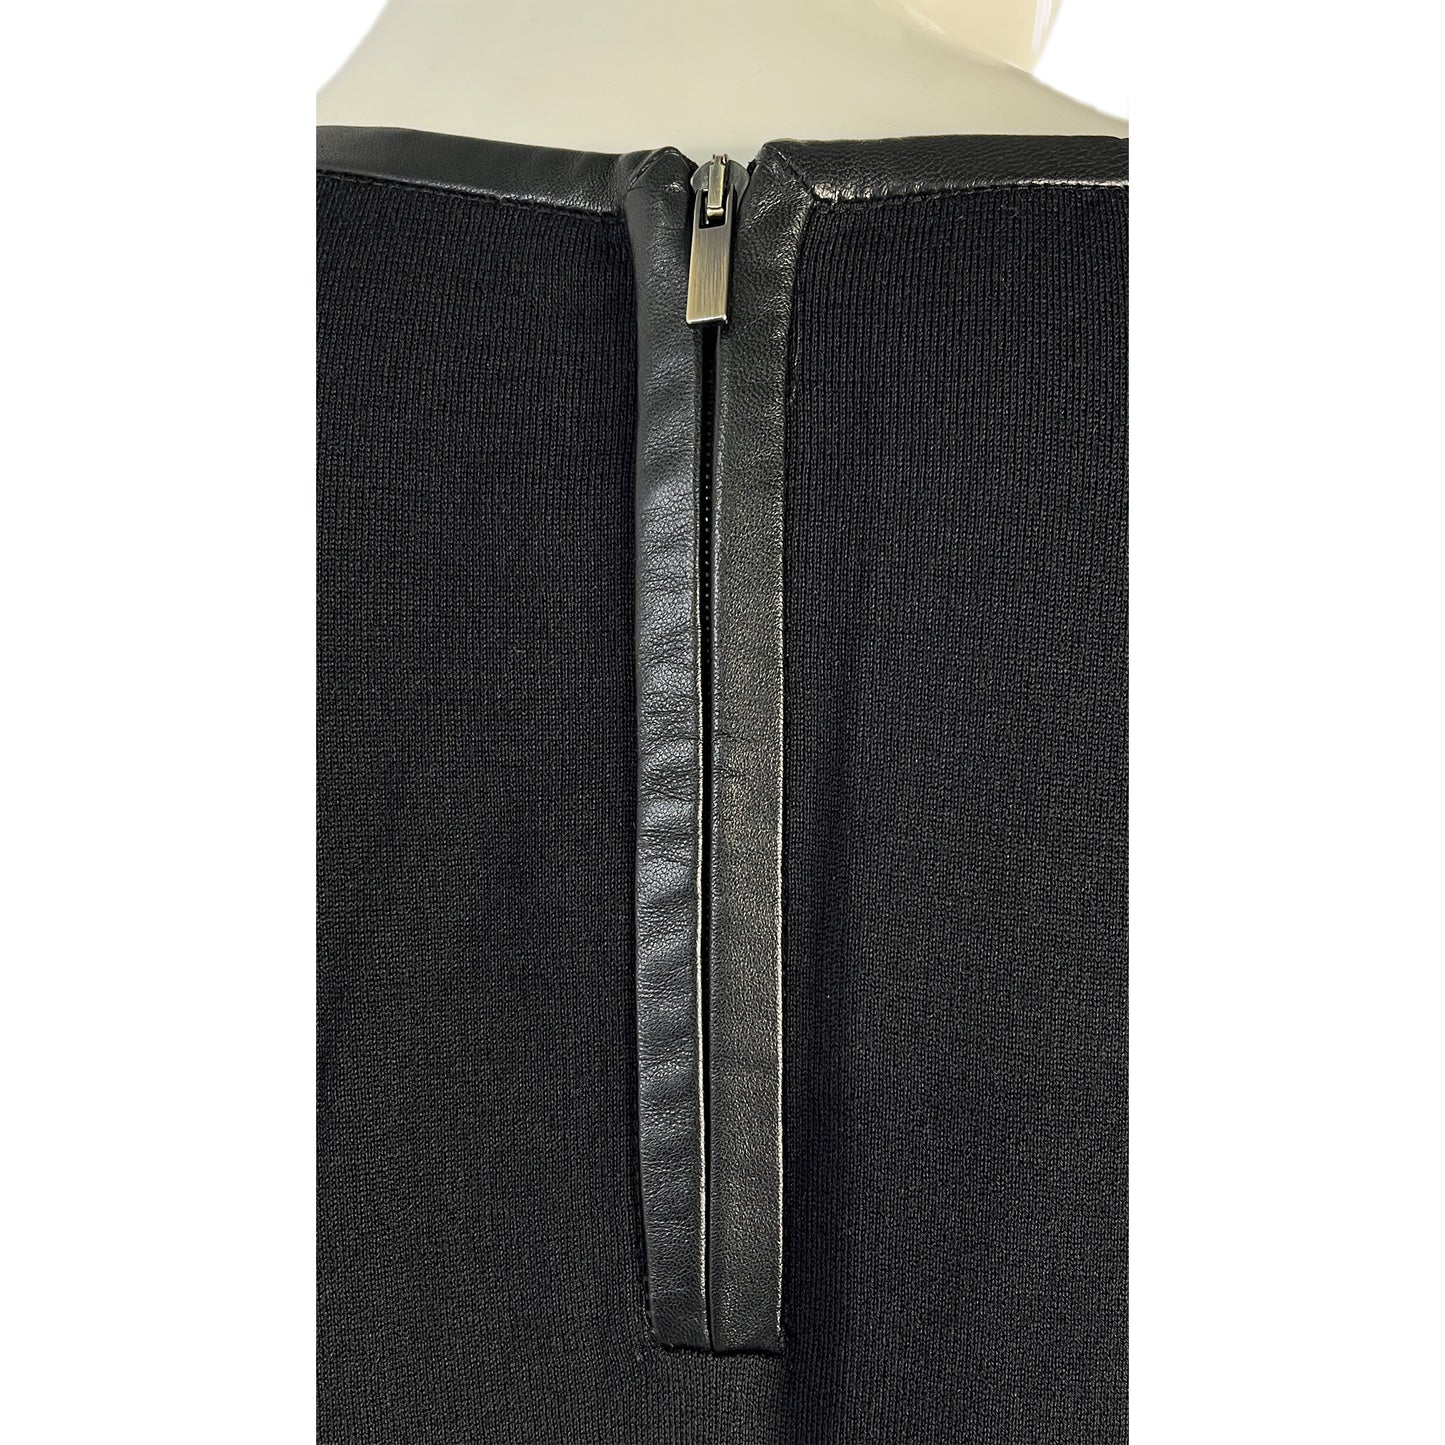 St. John Top Long Cape-Sleeves Leather Trim Details Black Size 16 SKU 000121-13